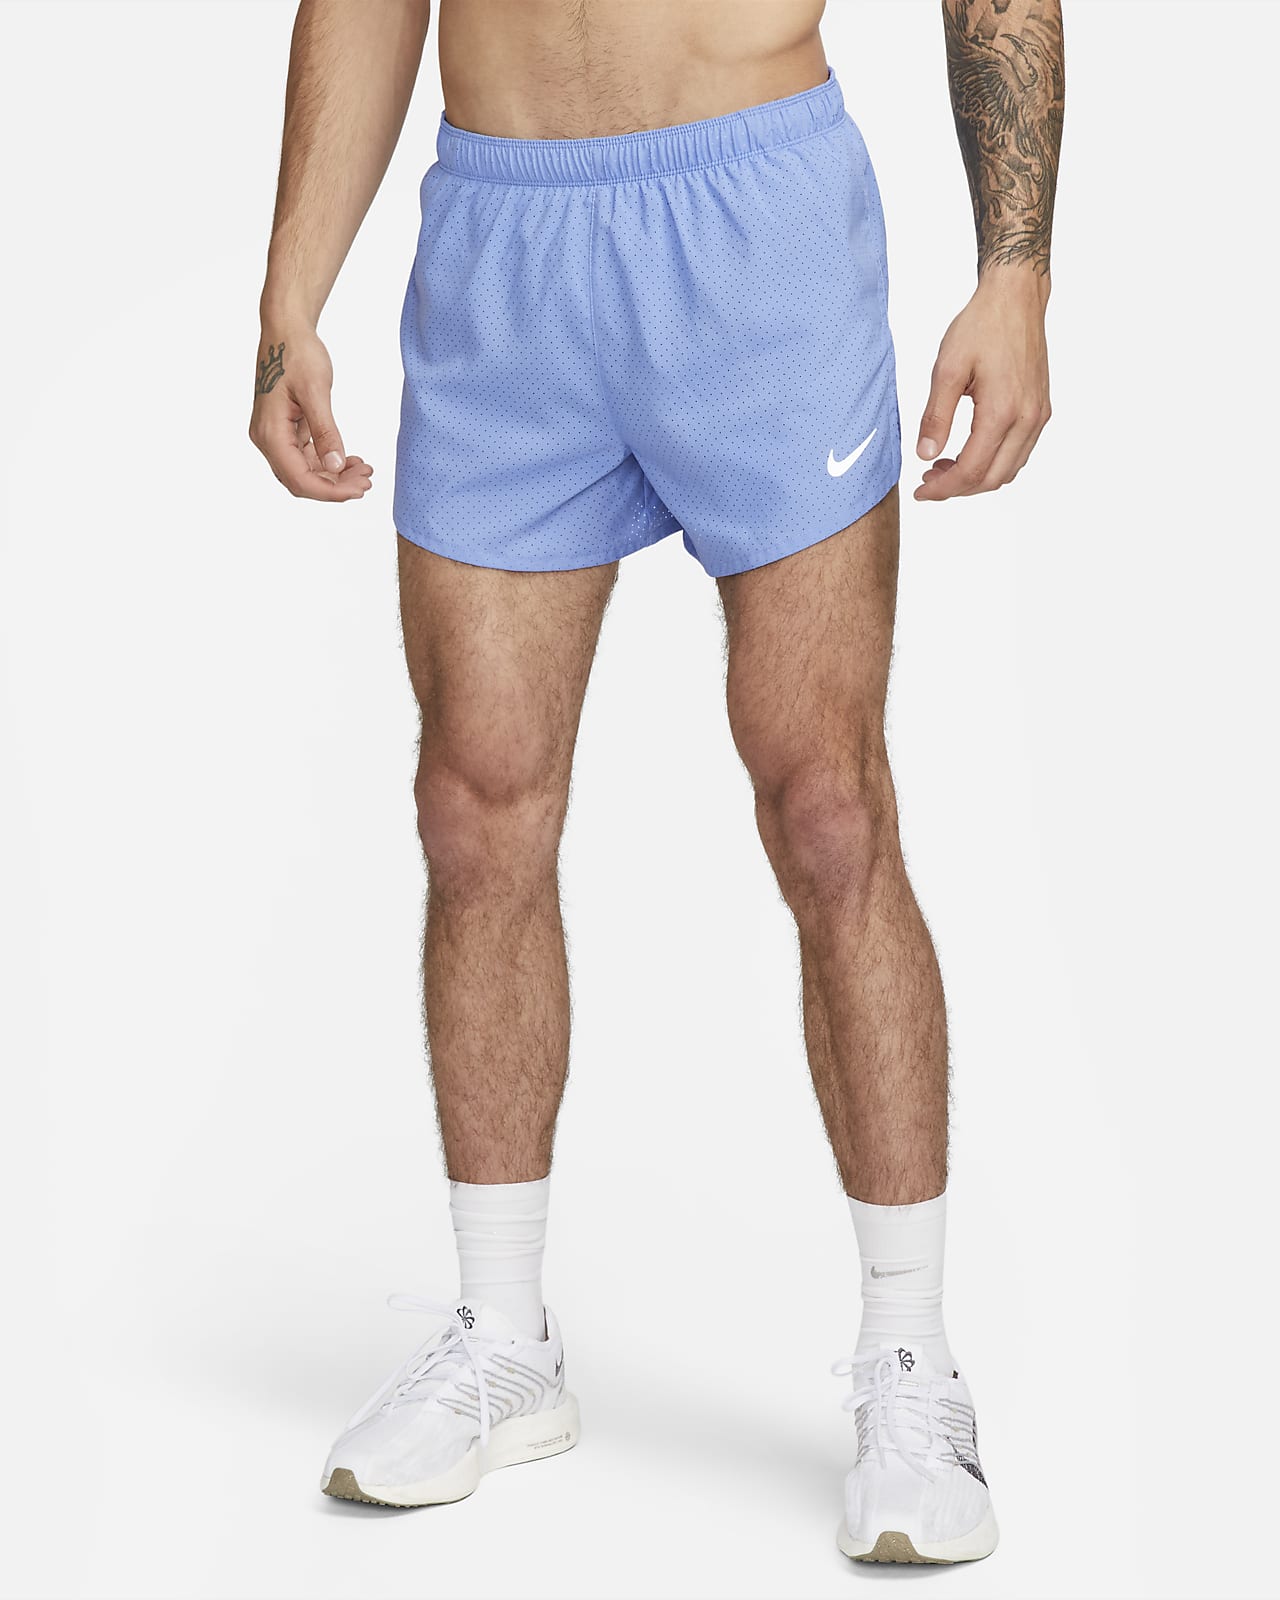 Nike Boys Sport Training Pants Large Black/Smoke Grey - Walmart.com